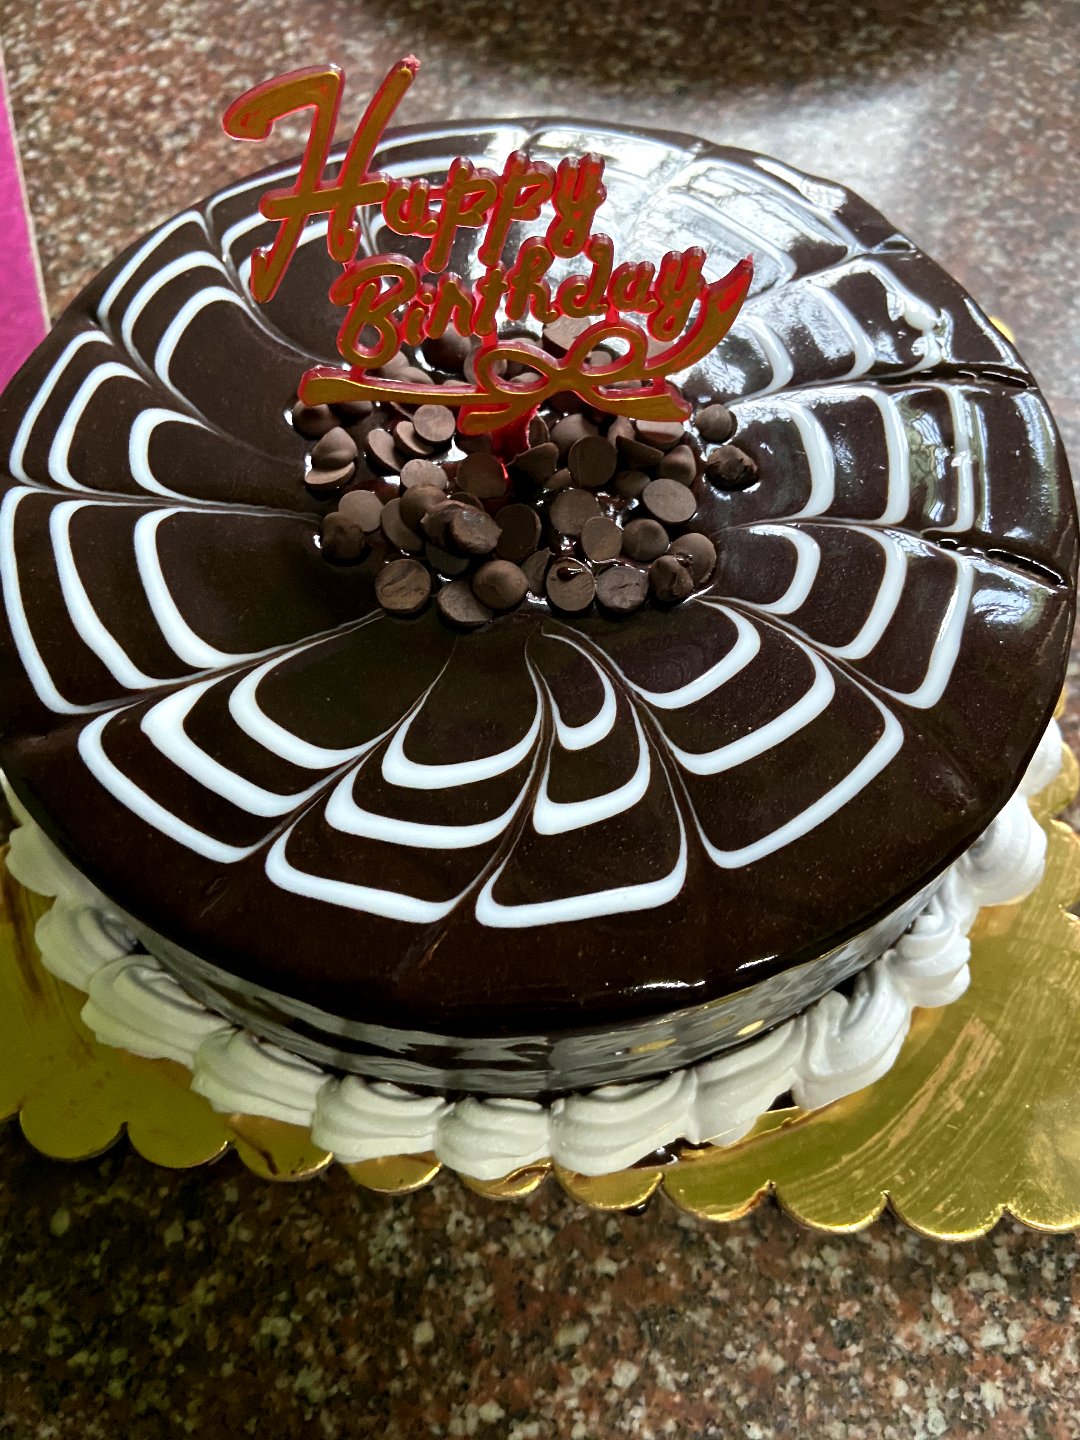 Spider Web Design Chocolate Cake - 1Pound